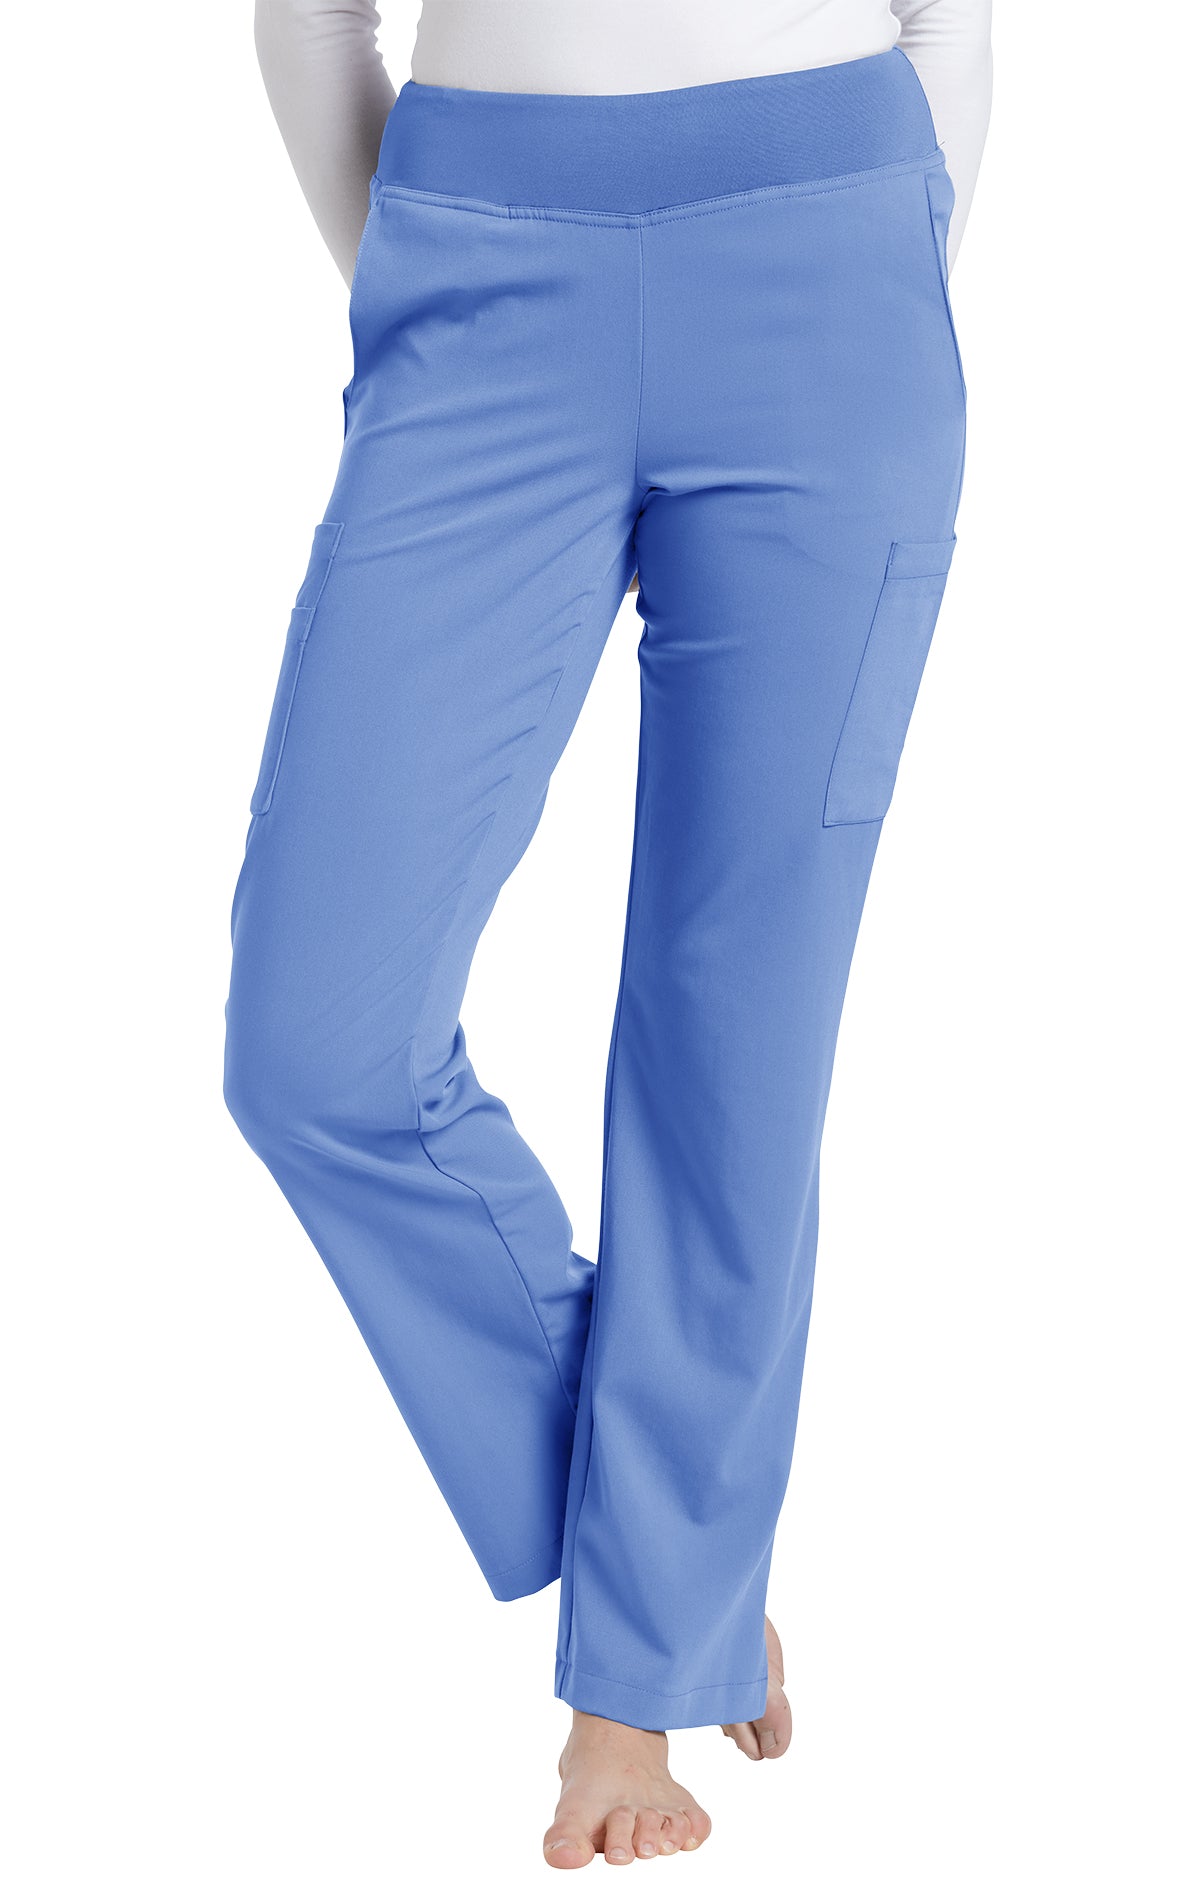 Pantalon de travail style yoga avec poche cargo Marvella White Cross #354 bleu ciel